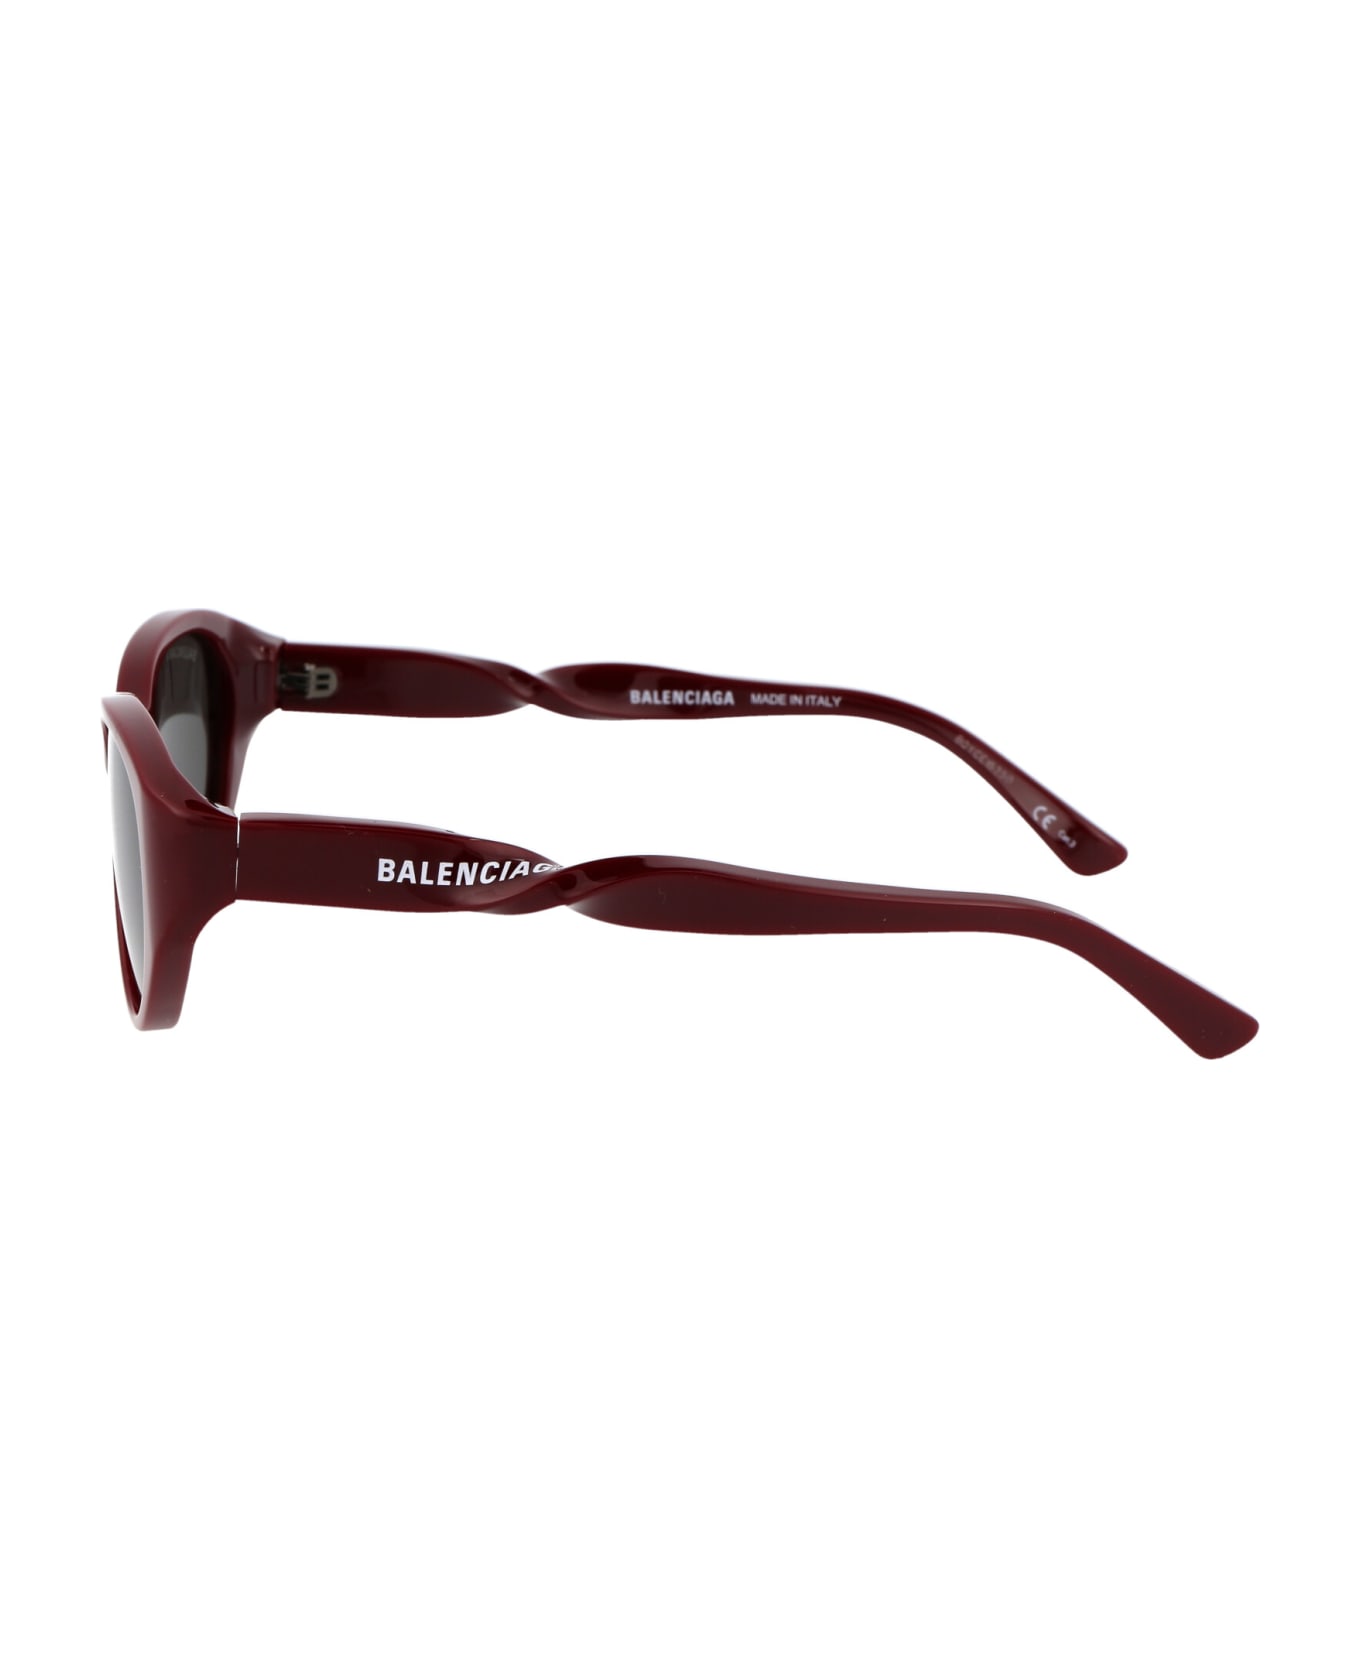 Balenciaga Eyewear Bb0209sa Sunglasses - 003 BURGUNDY BURGUNDY GREY サングラス